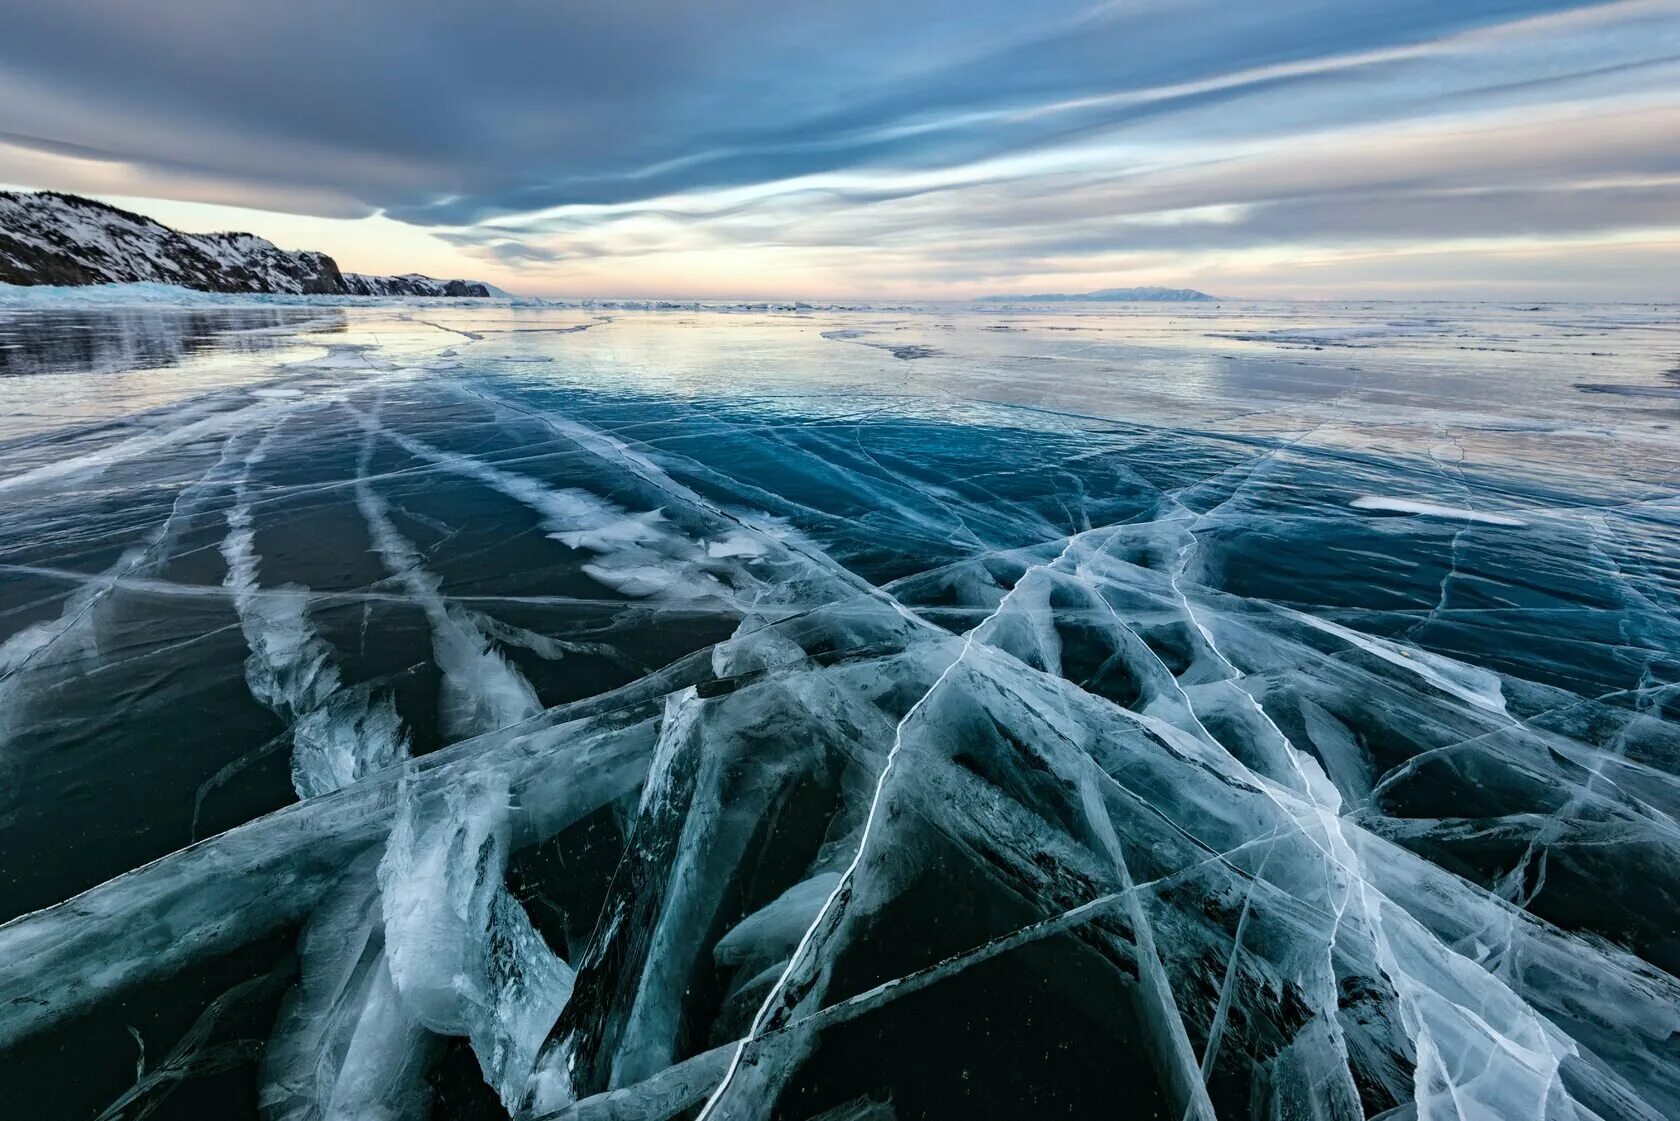 Лед толще воды. Озеро Байкал лед. Озеро Байкал зимой. Горячинск Байкал зимой. Байкал зимой лед.